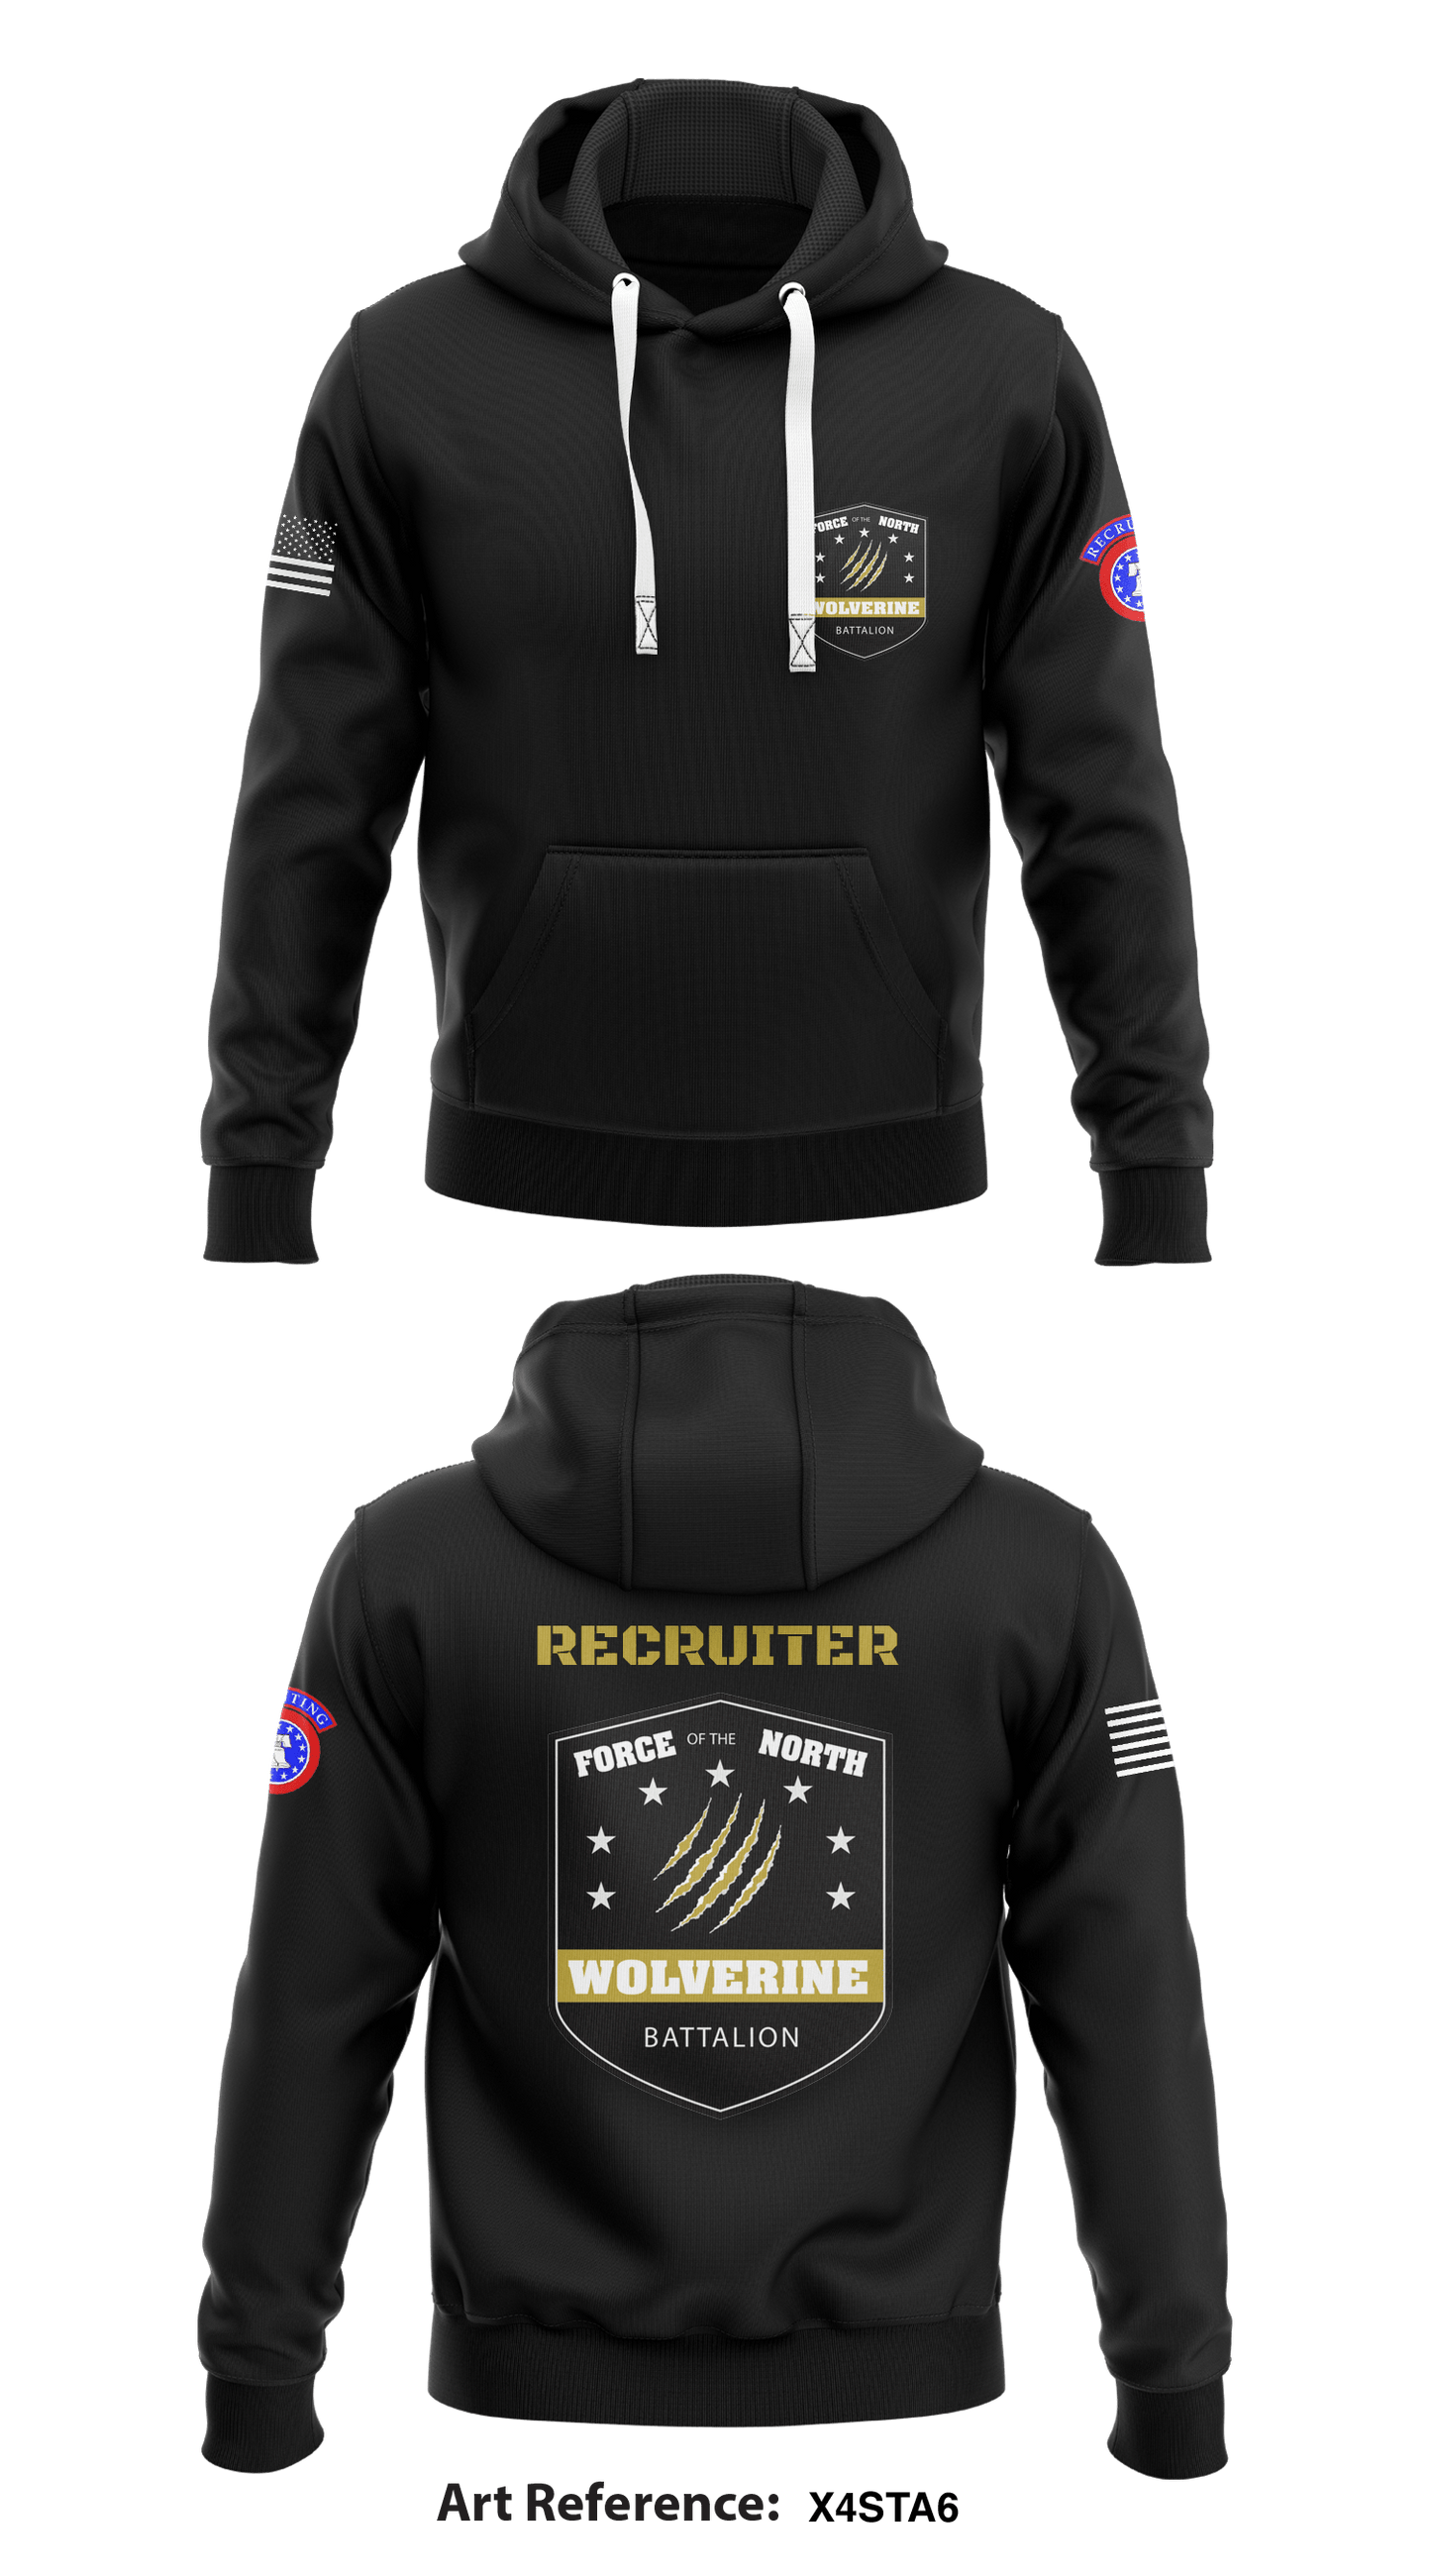 Wolverine Recruiting Battalion Store 1  Core Men's Hooded Performance Sweatshirt - x4STA6